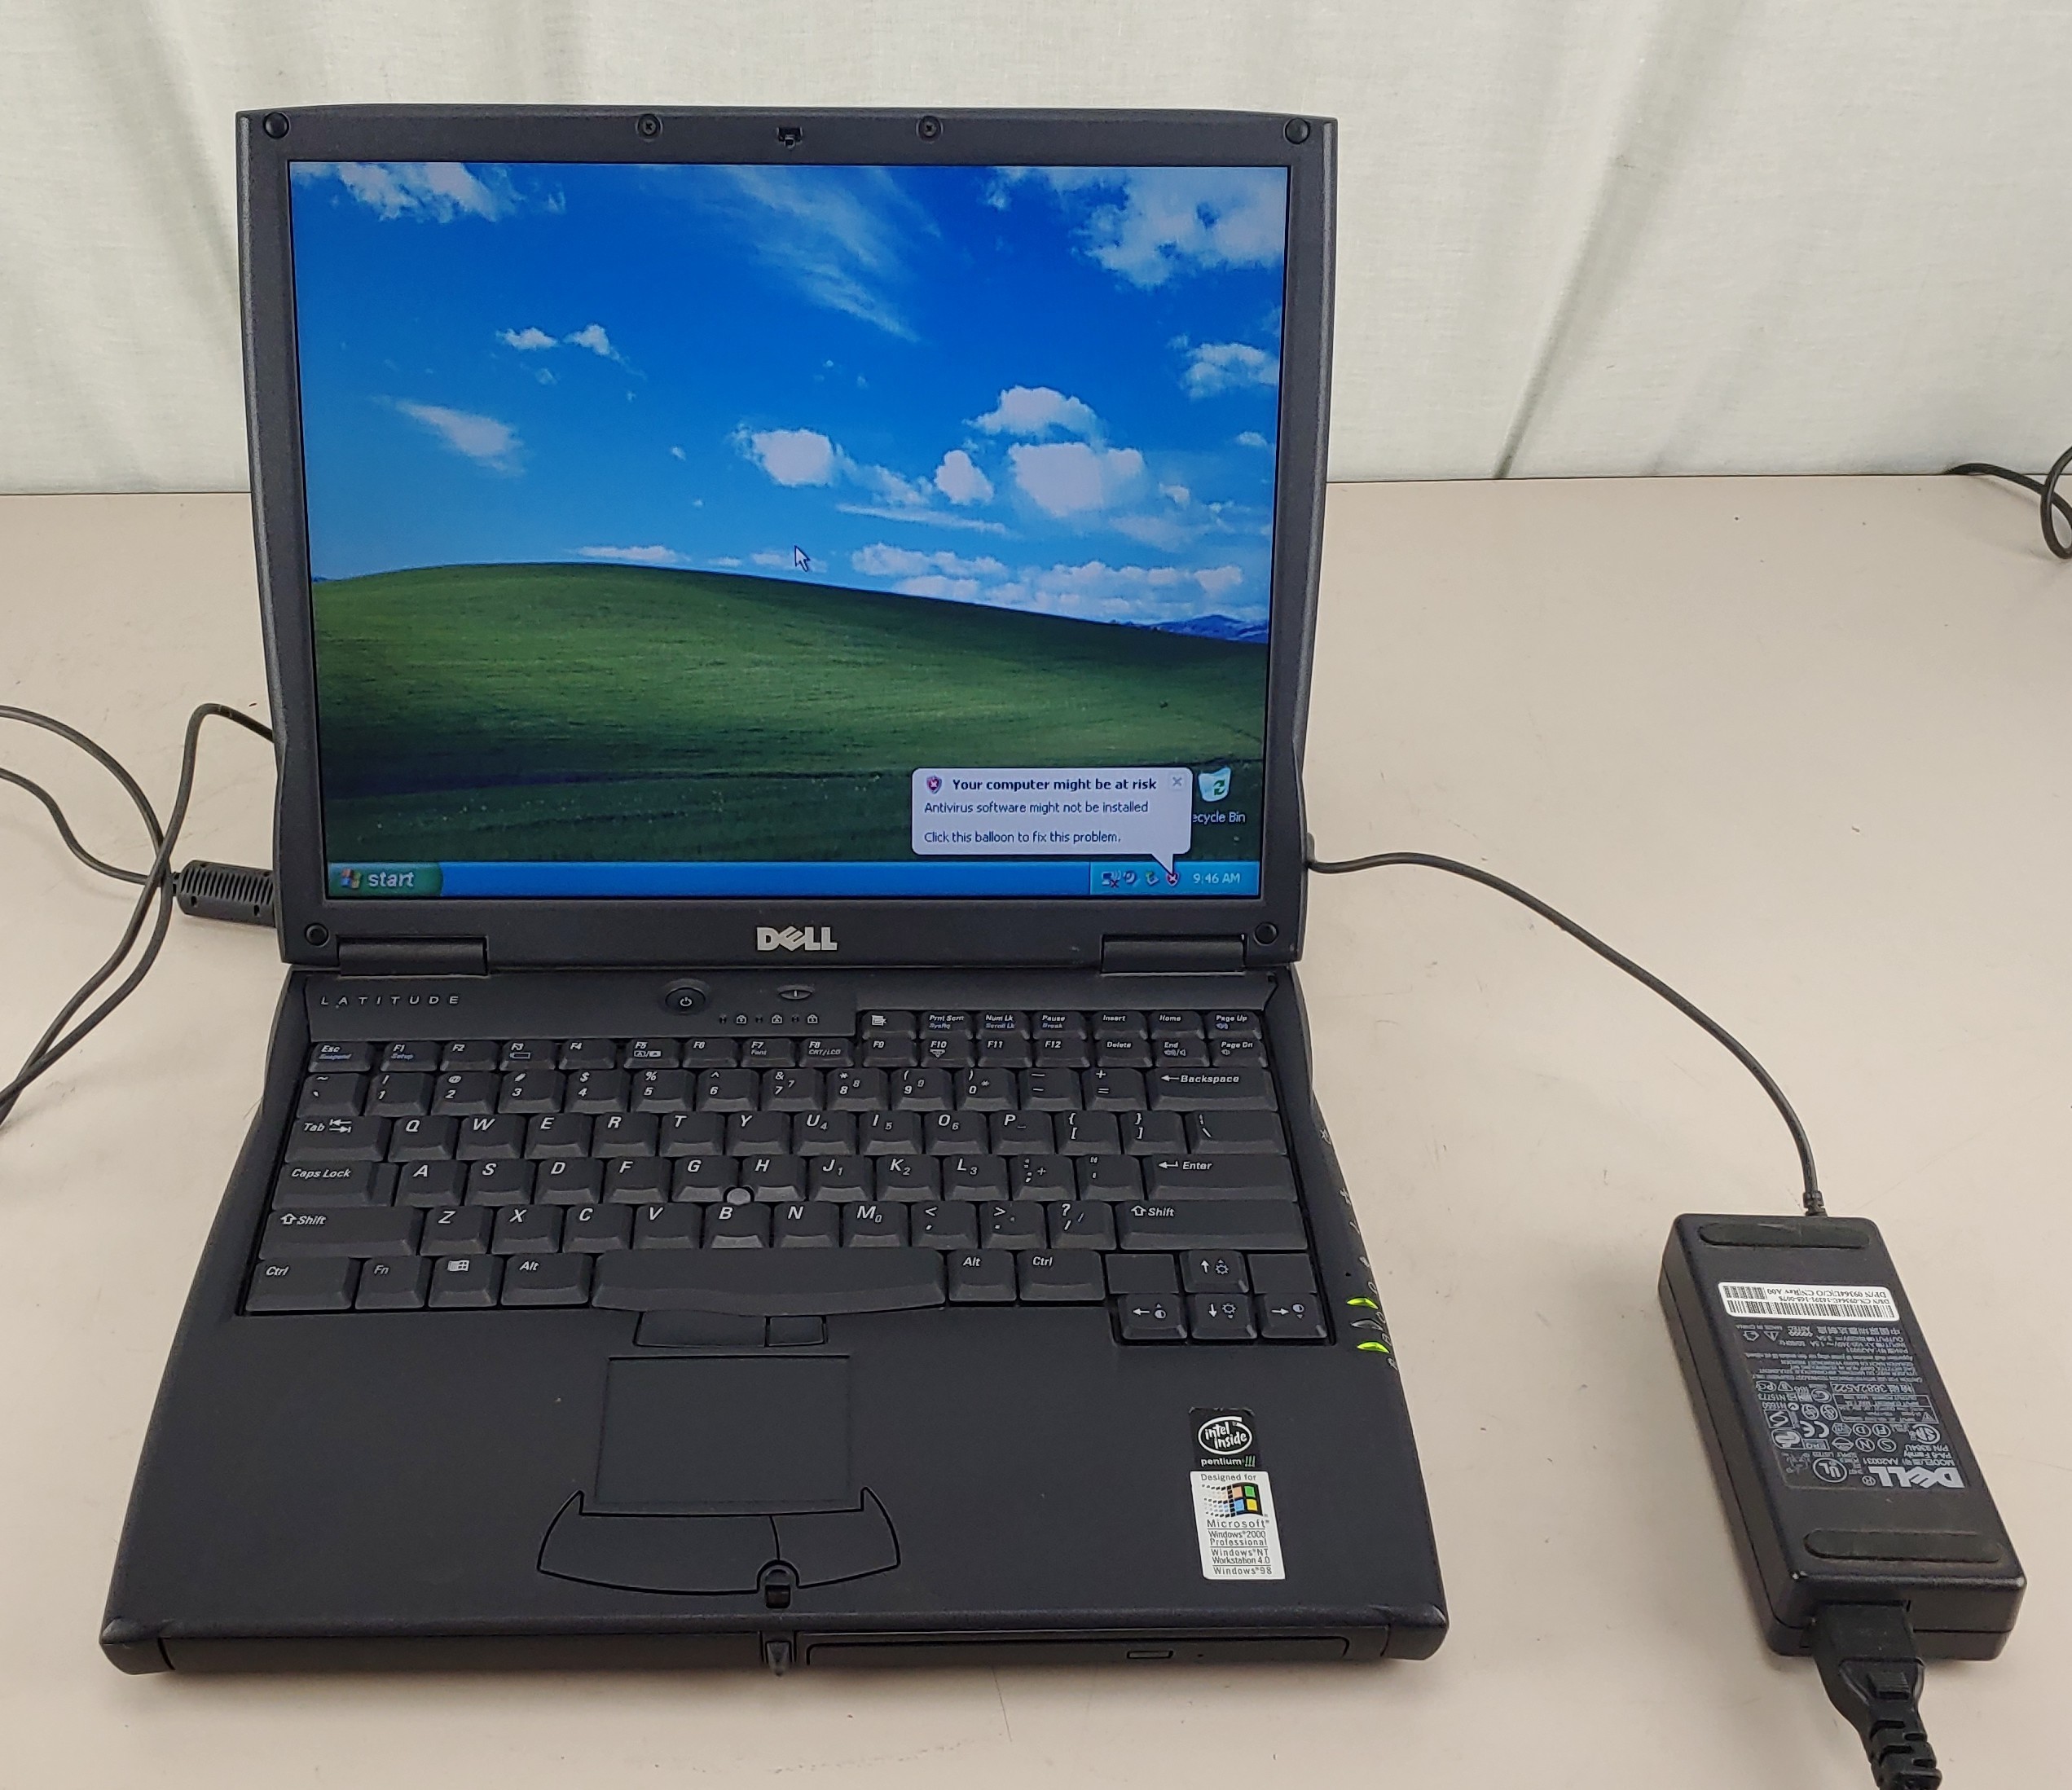 Dell Latitude C600 6GB HDD 256MB RAM Pentium III 751MHz Windows XP